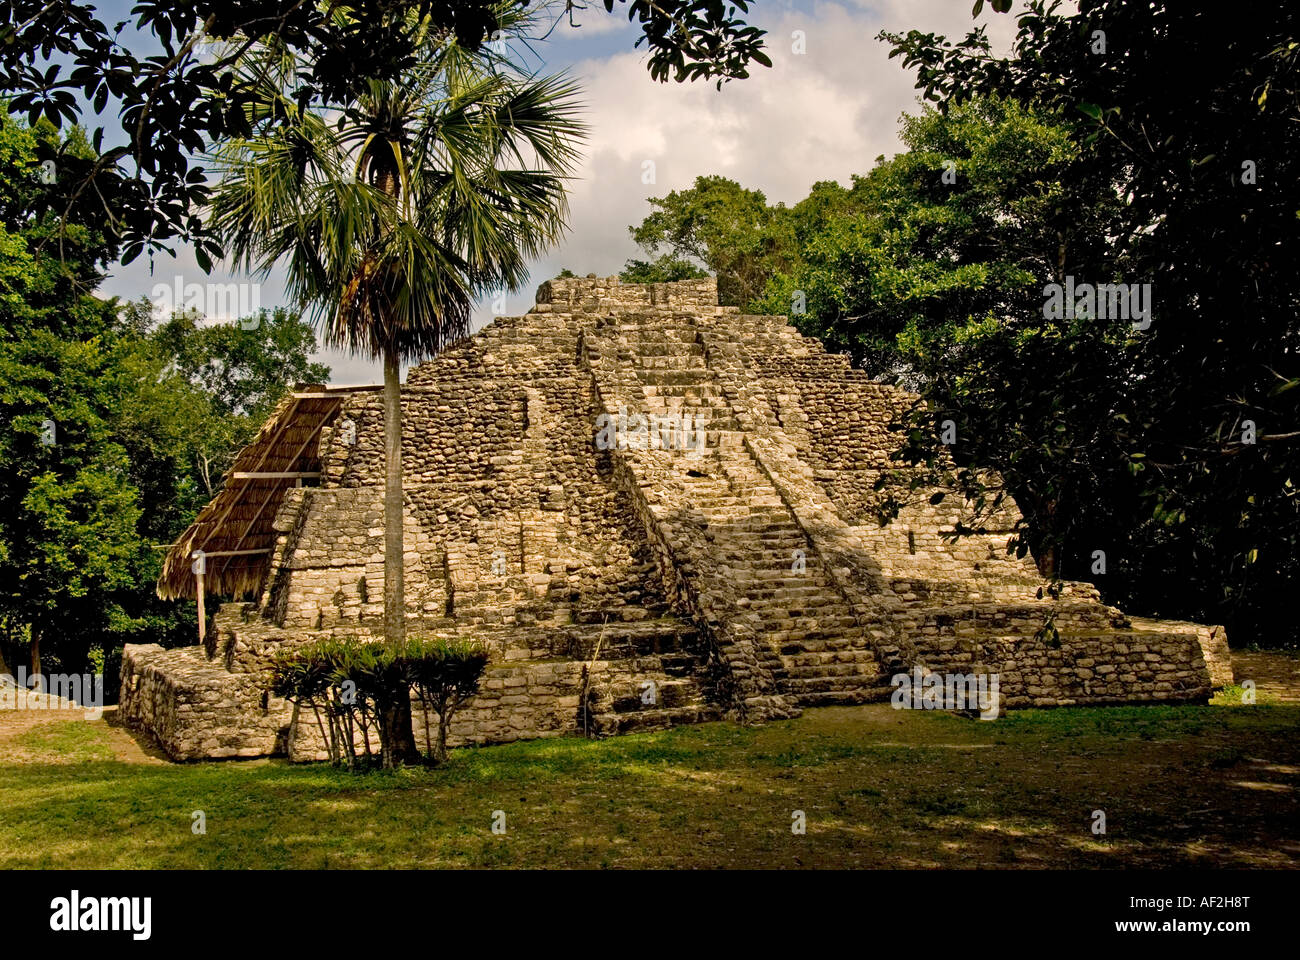 Costa Maya Maya Chacchoben Pyramide las vasijas ruine Banque D'Images